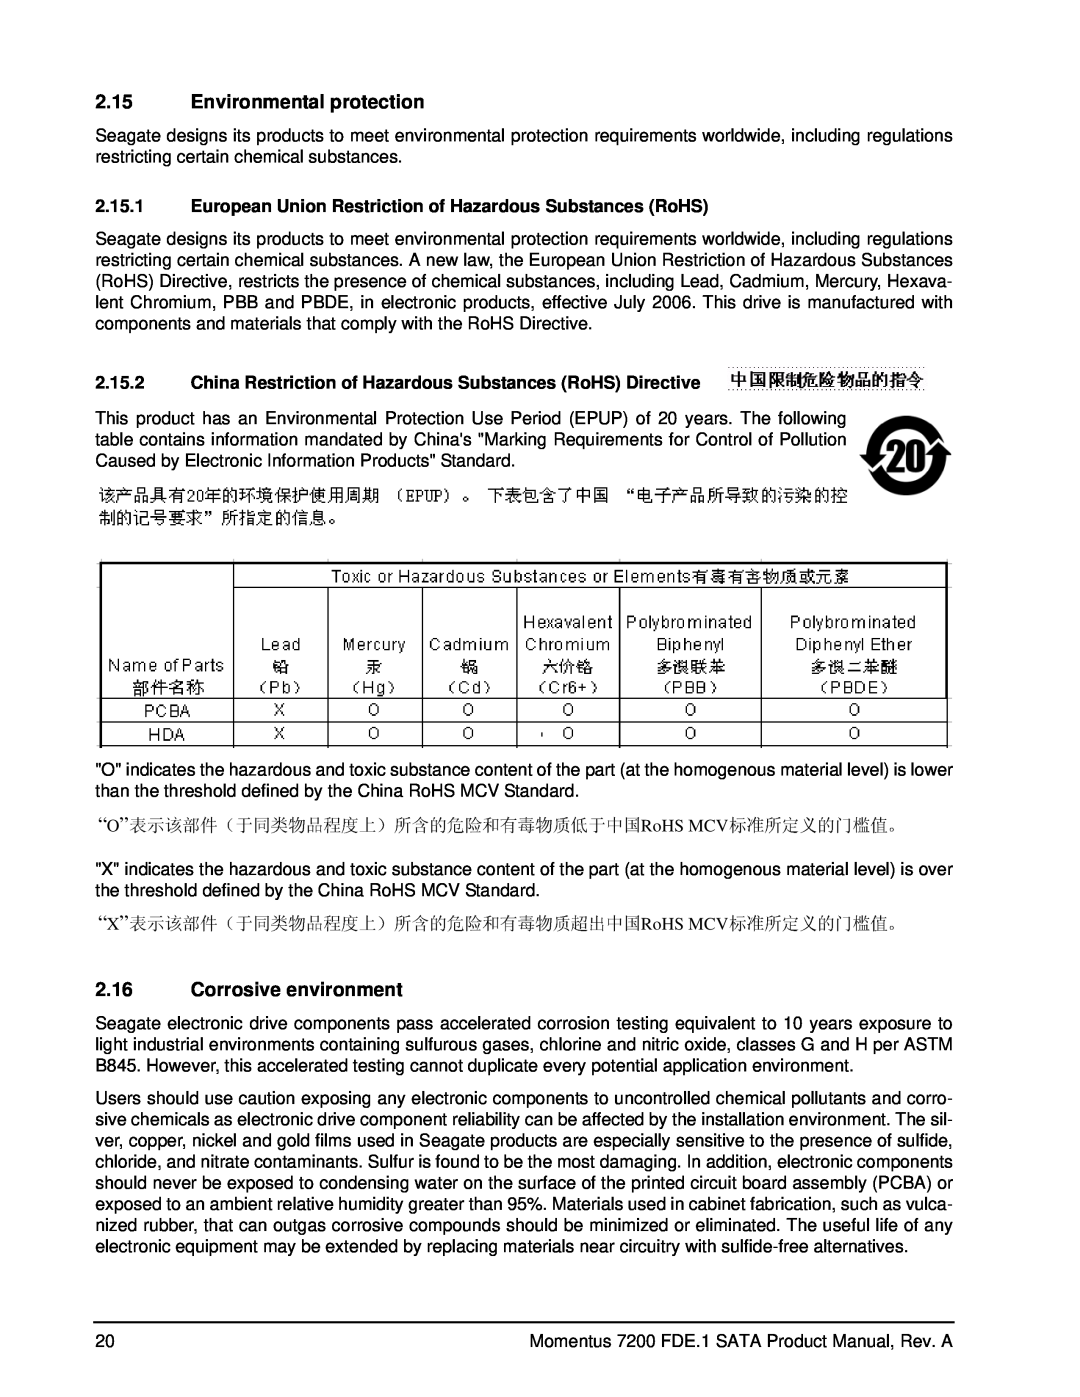 Seagate ST9120414AS, ST980414ASG Environmental protection, European Union Restriction of Hazardous Substances RoHS, “ O” 